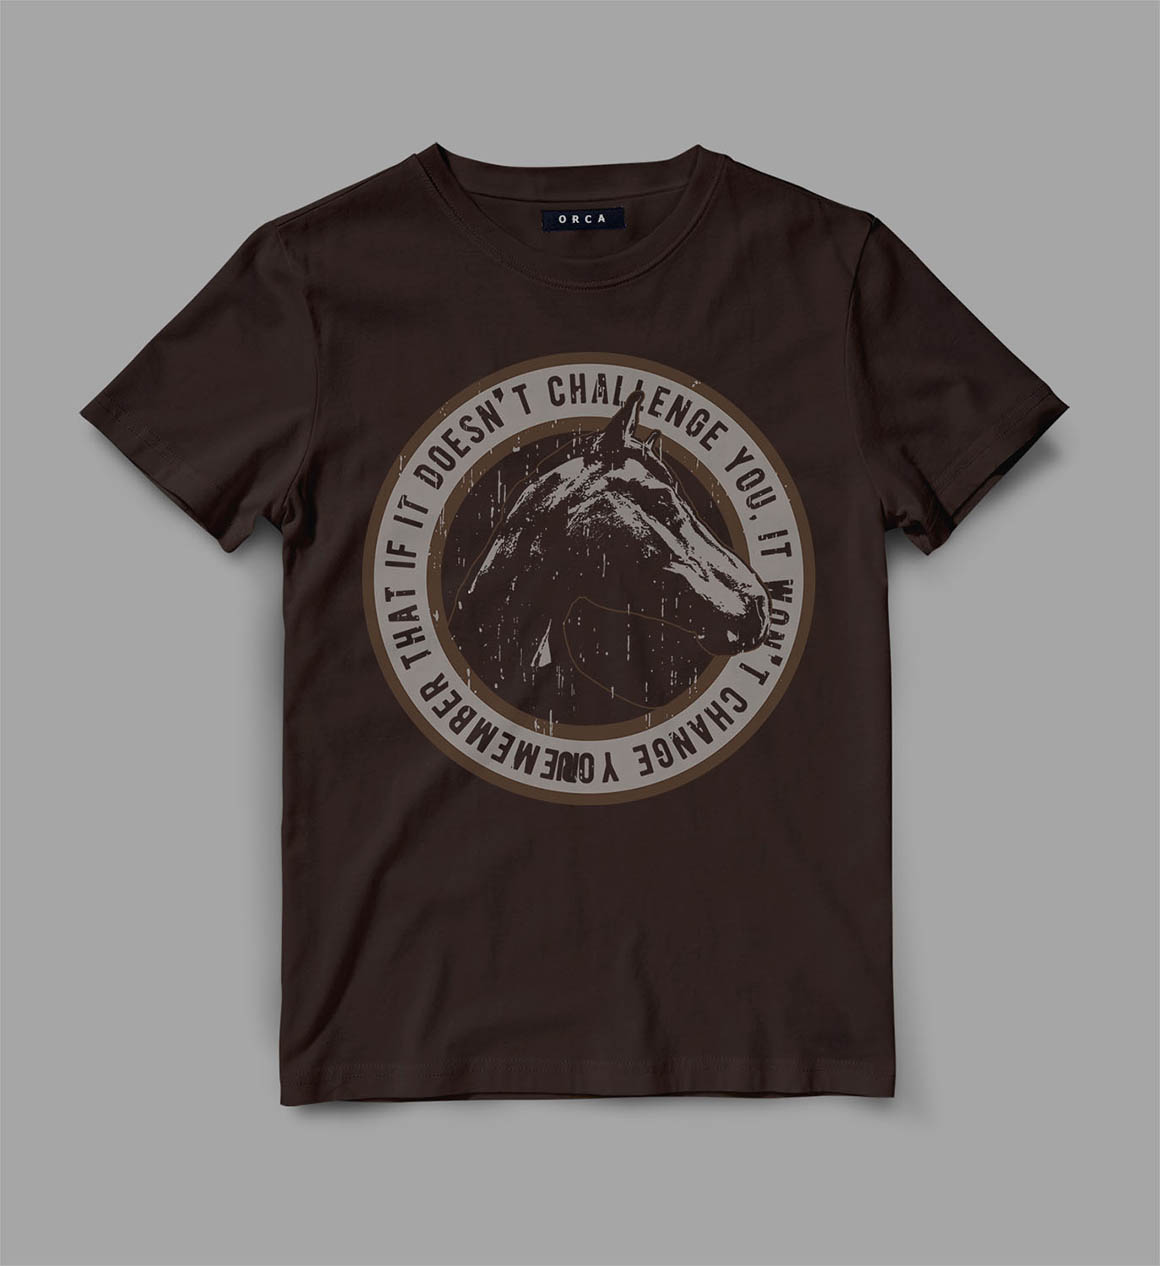 101 T-shirt Designs with Animals - Dealjumbo